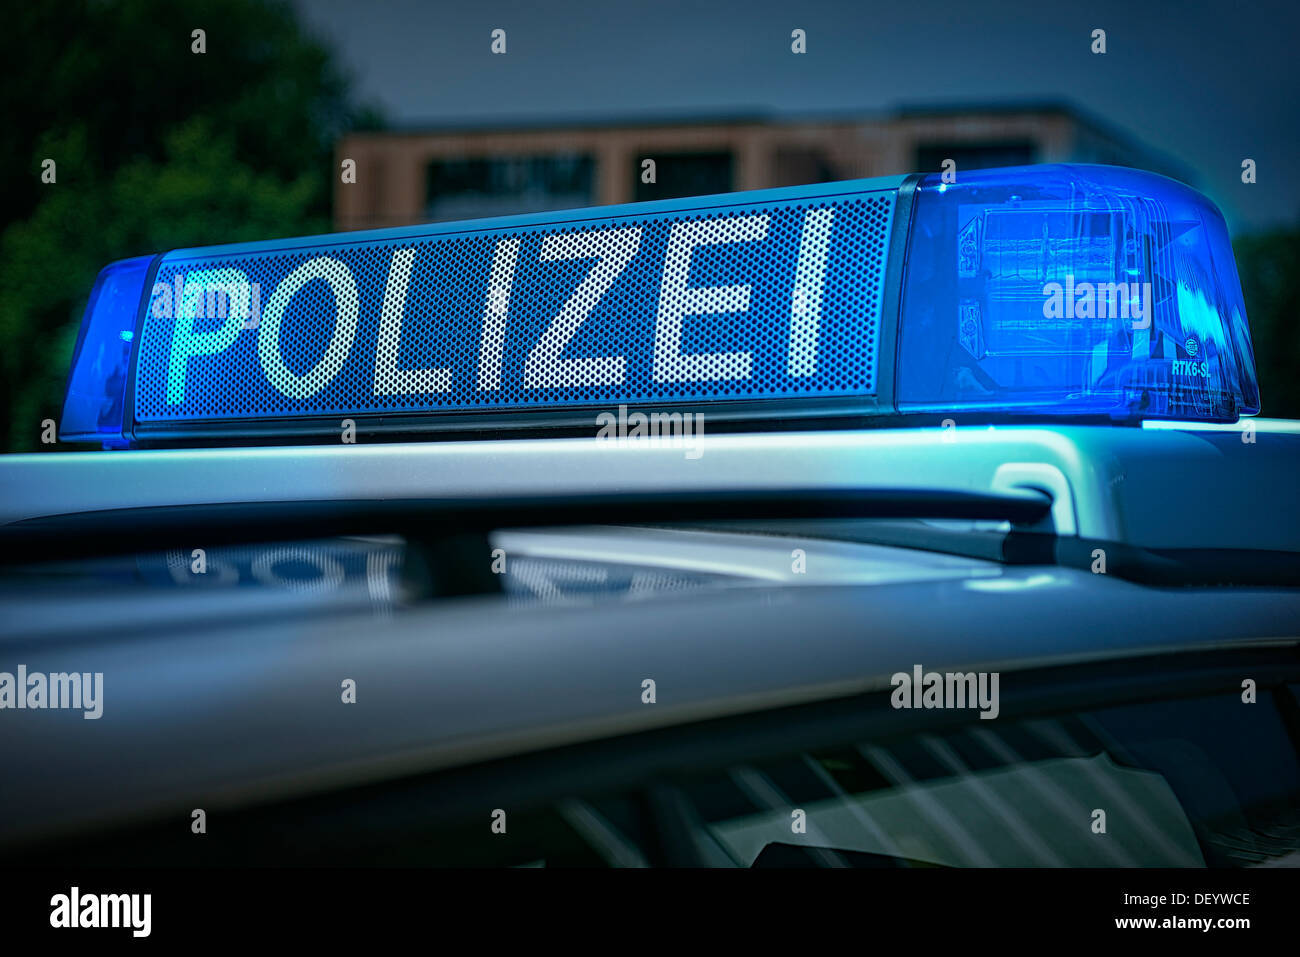 Course de police sur un véhicule d'urgence de la police, Polizei-Schriftzug Einsatzfahrzeug auf einem der Polizei Banque D'Images